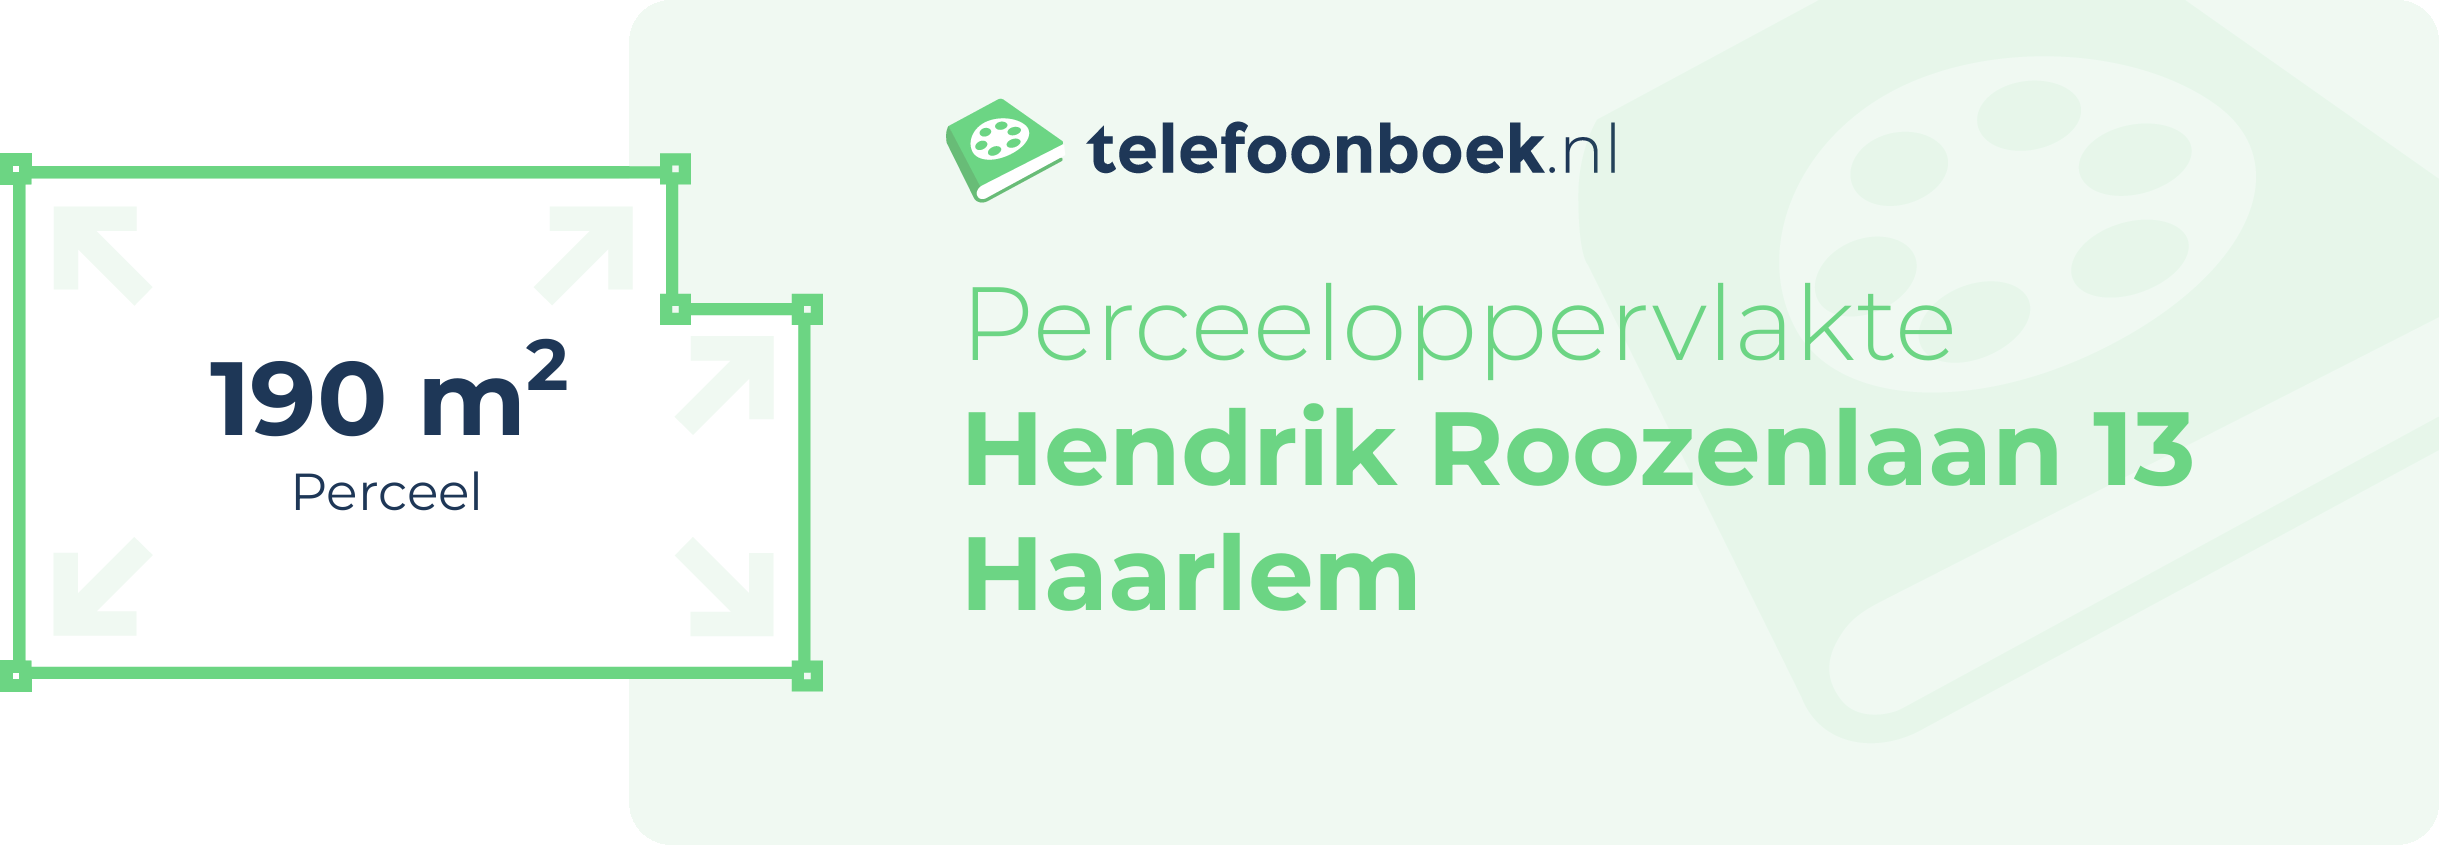 Perceeloppervlakte Hendrik Roozenlaan 13 Haarlem